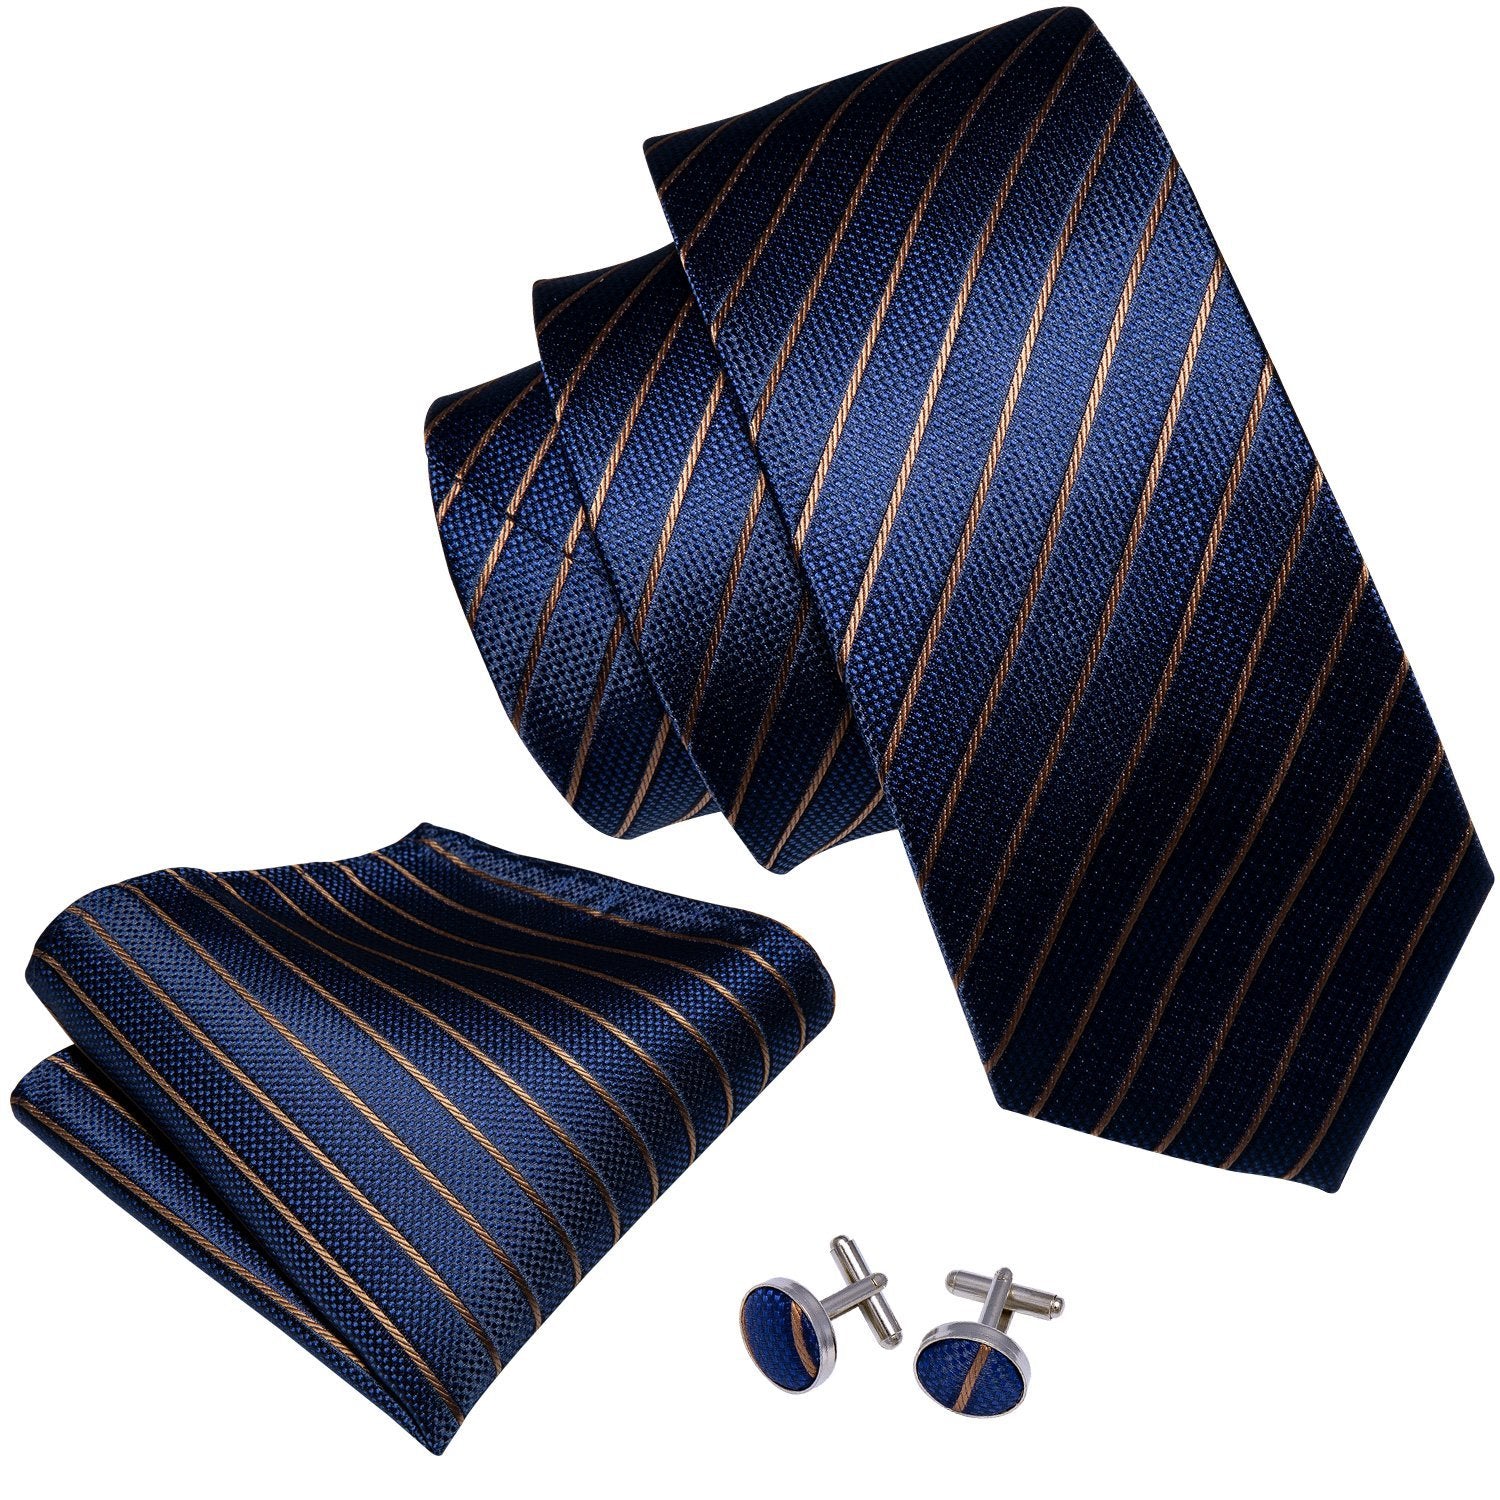 Barry.wang Blue Tie Golden Striped Men's Silk Tie Pocket Square Cufflinks Set with Lapel Pin Brooch